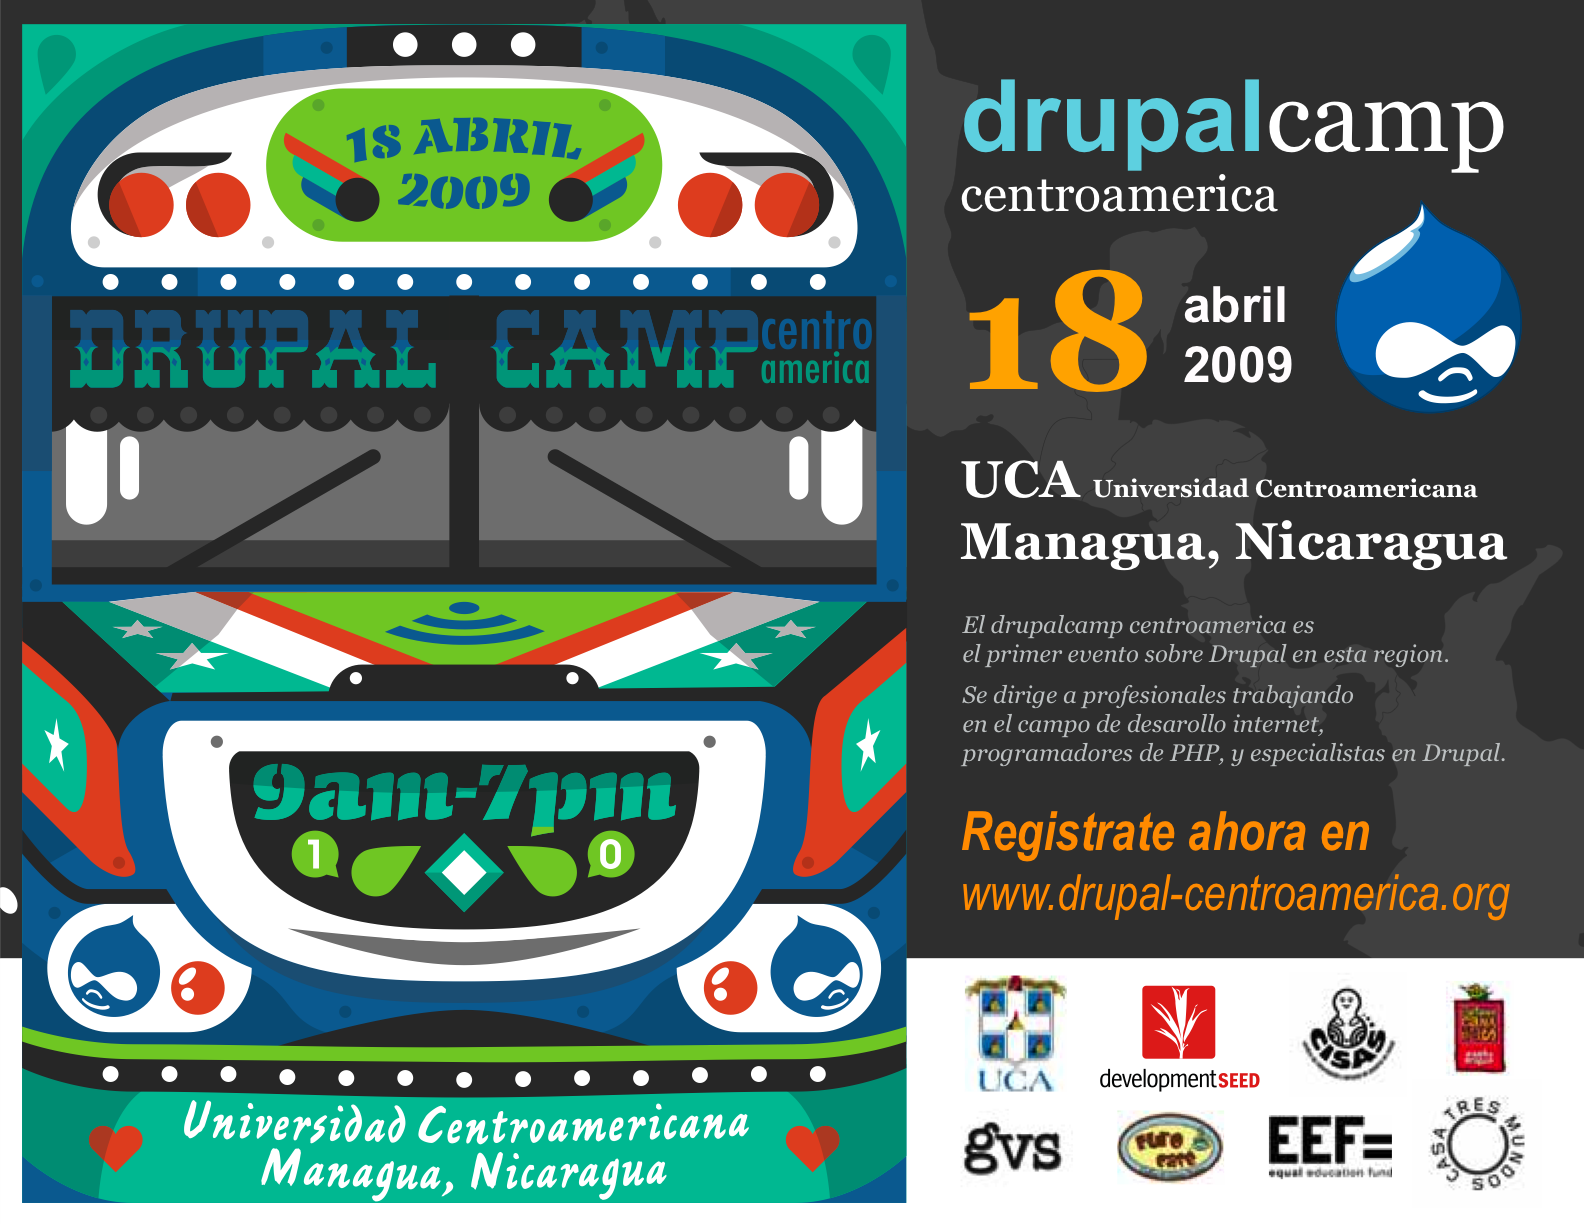 DrupalCamp Centroamerica 2009 Poster